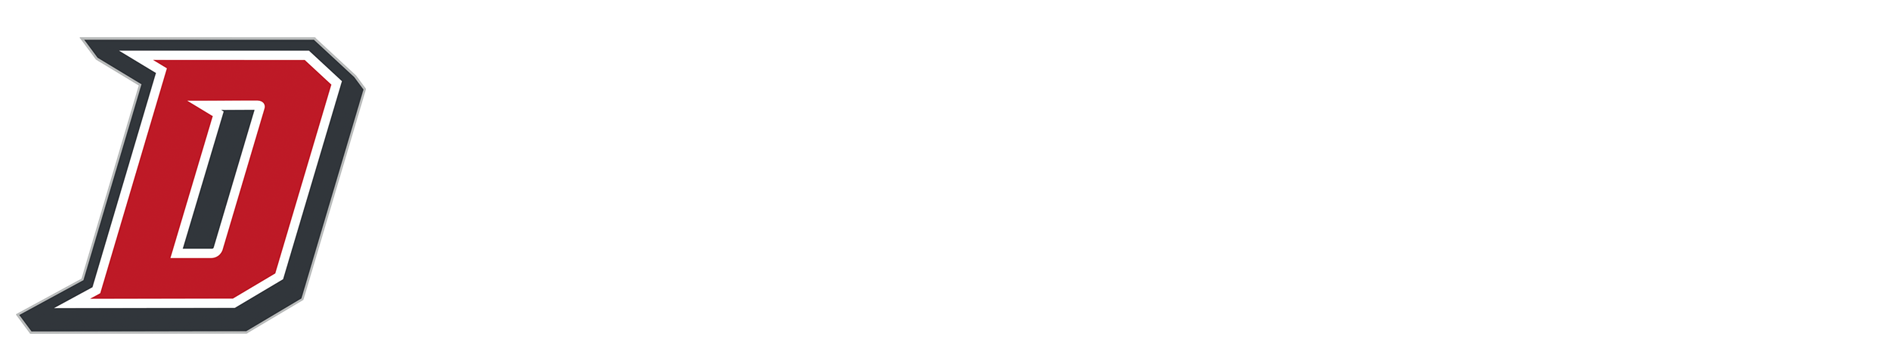 Dover Cyber Academy Header